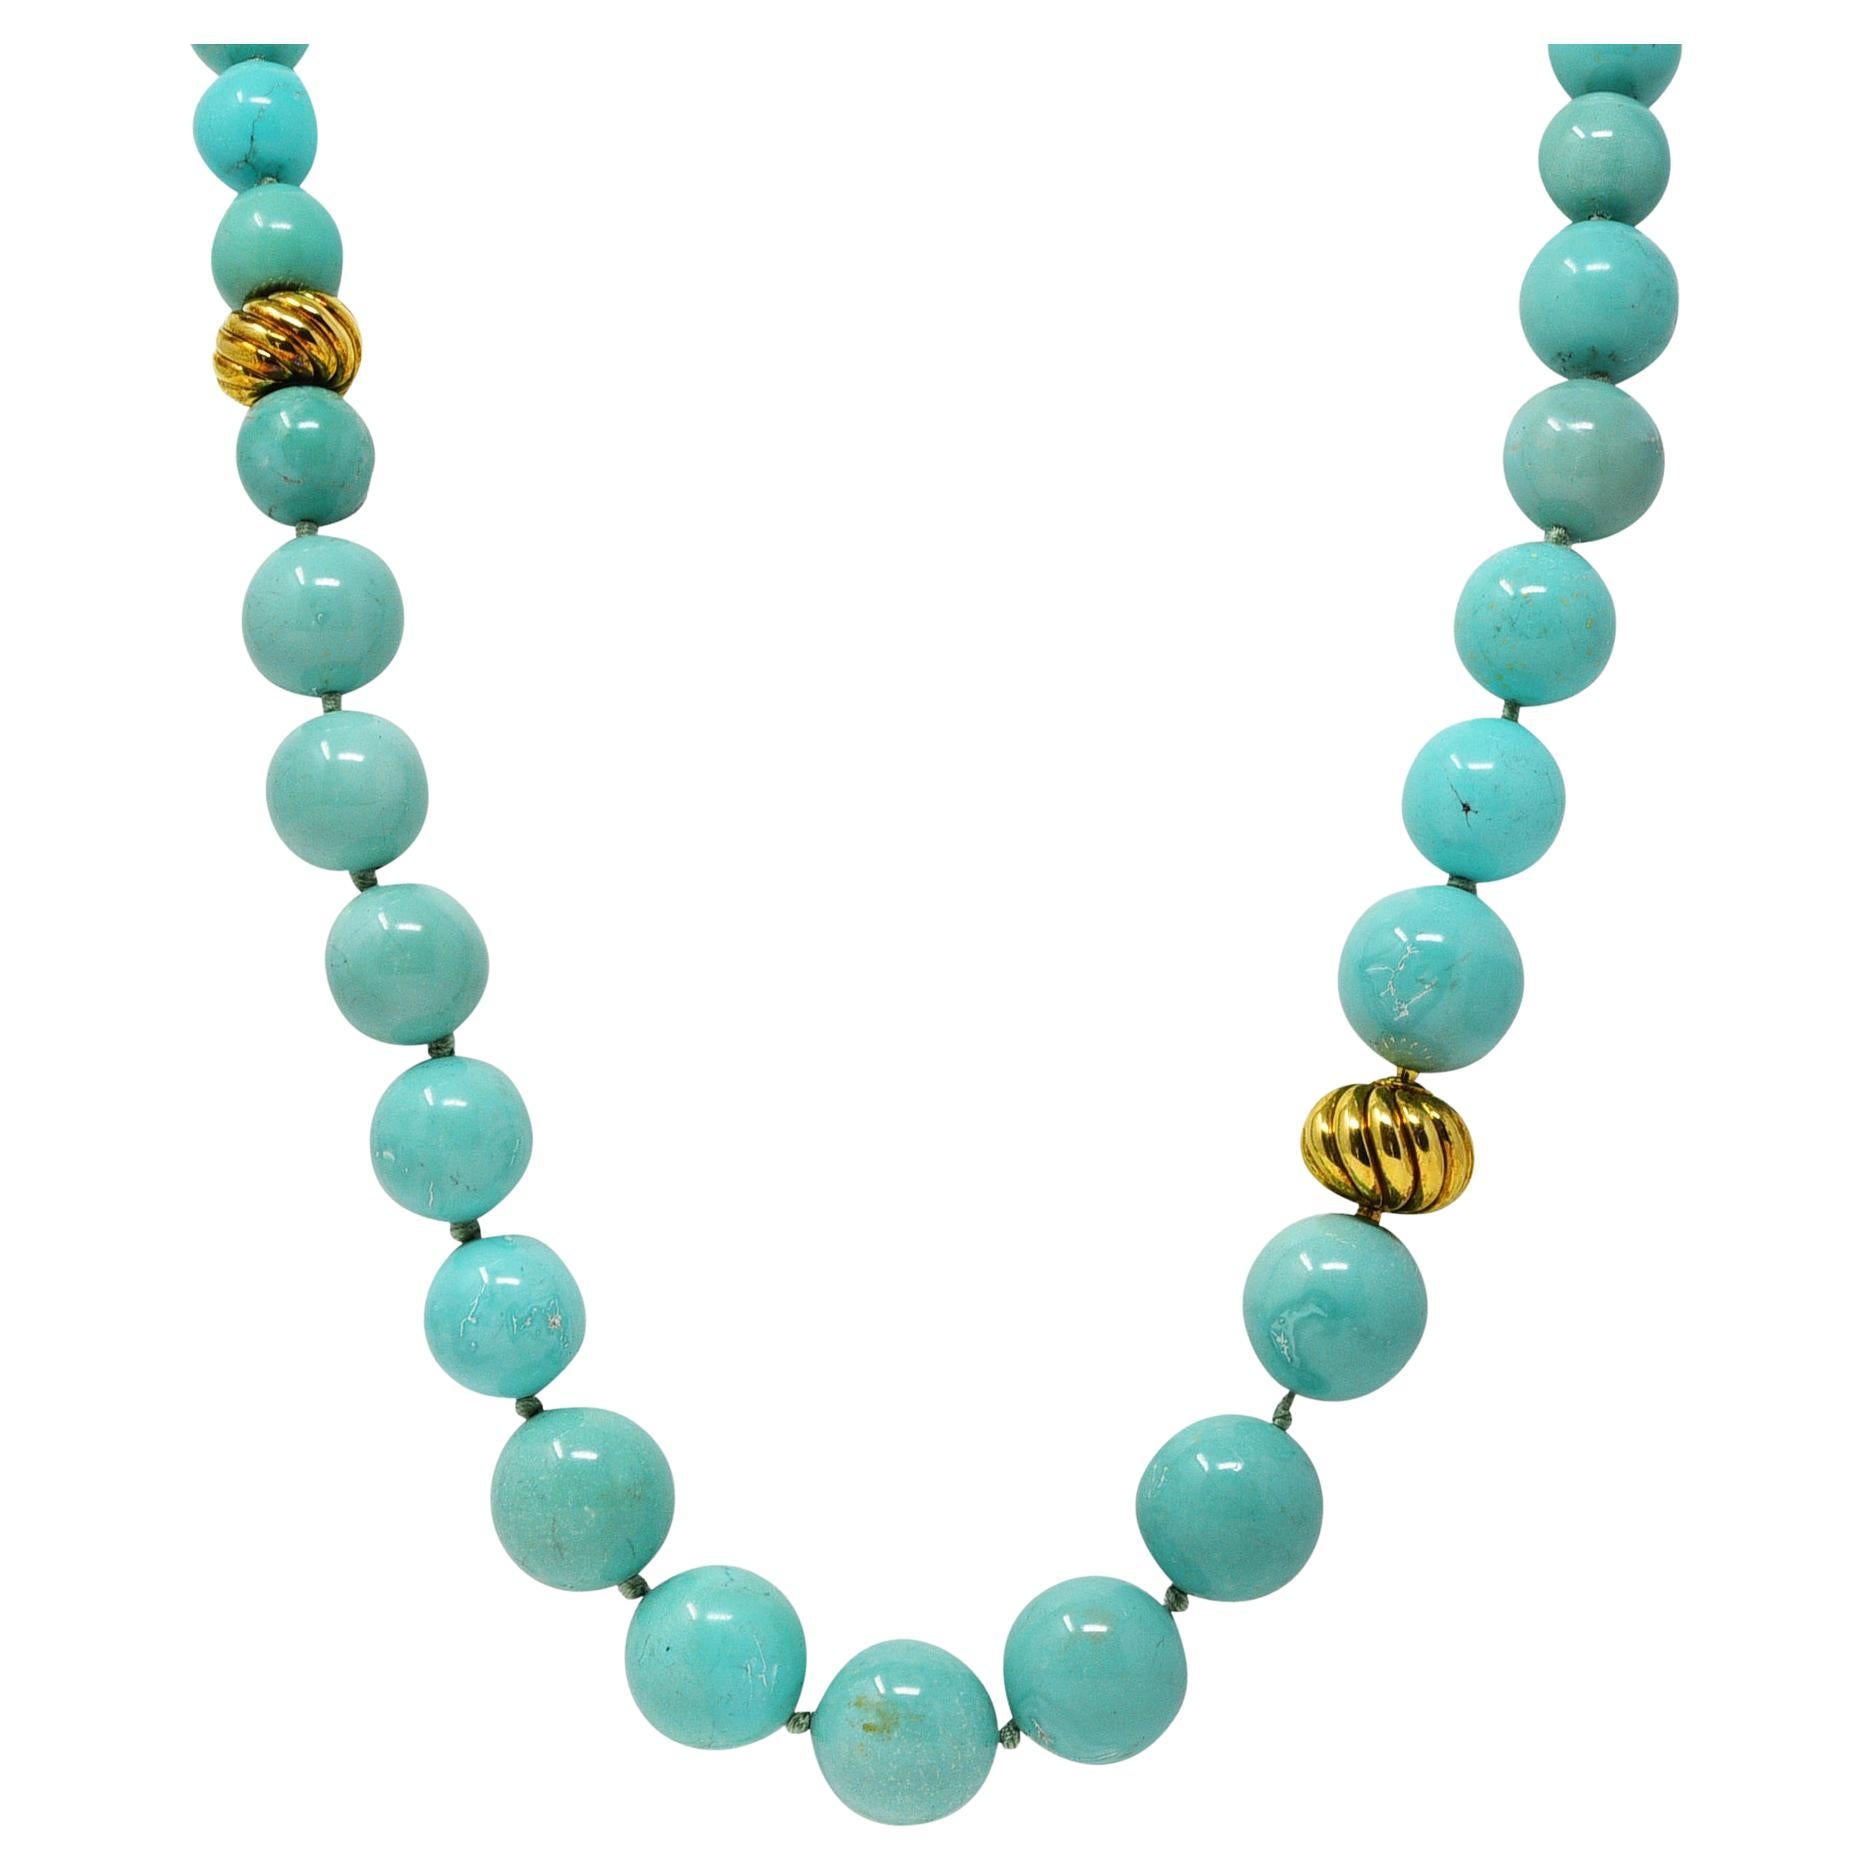 David Yurman Turquoise 18 Karat Yellow Gold Graduated Bead Necklace